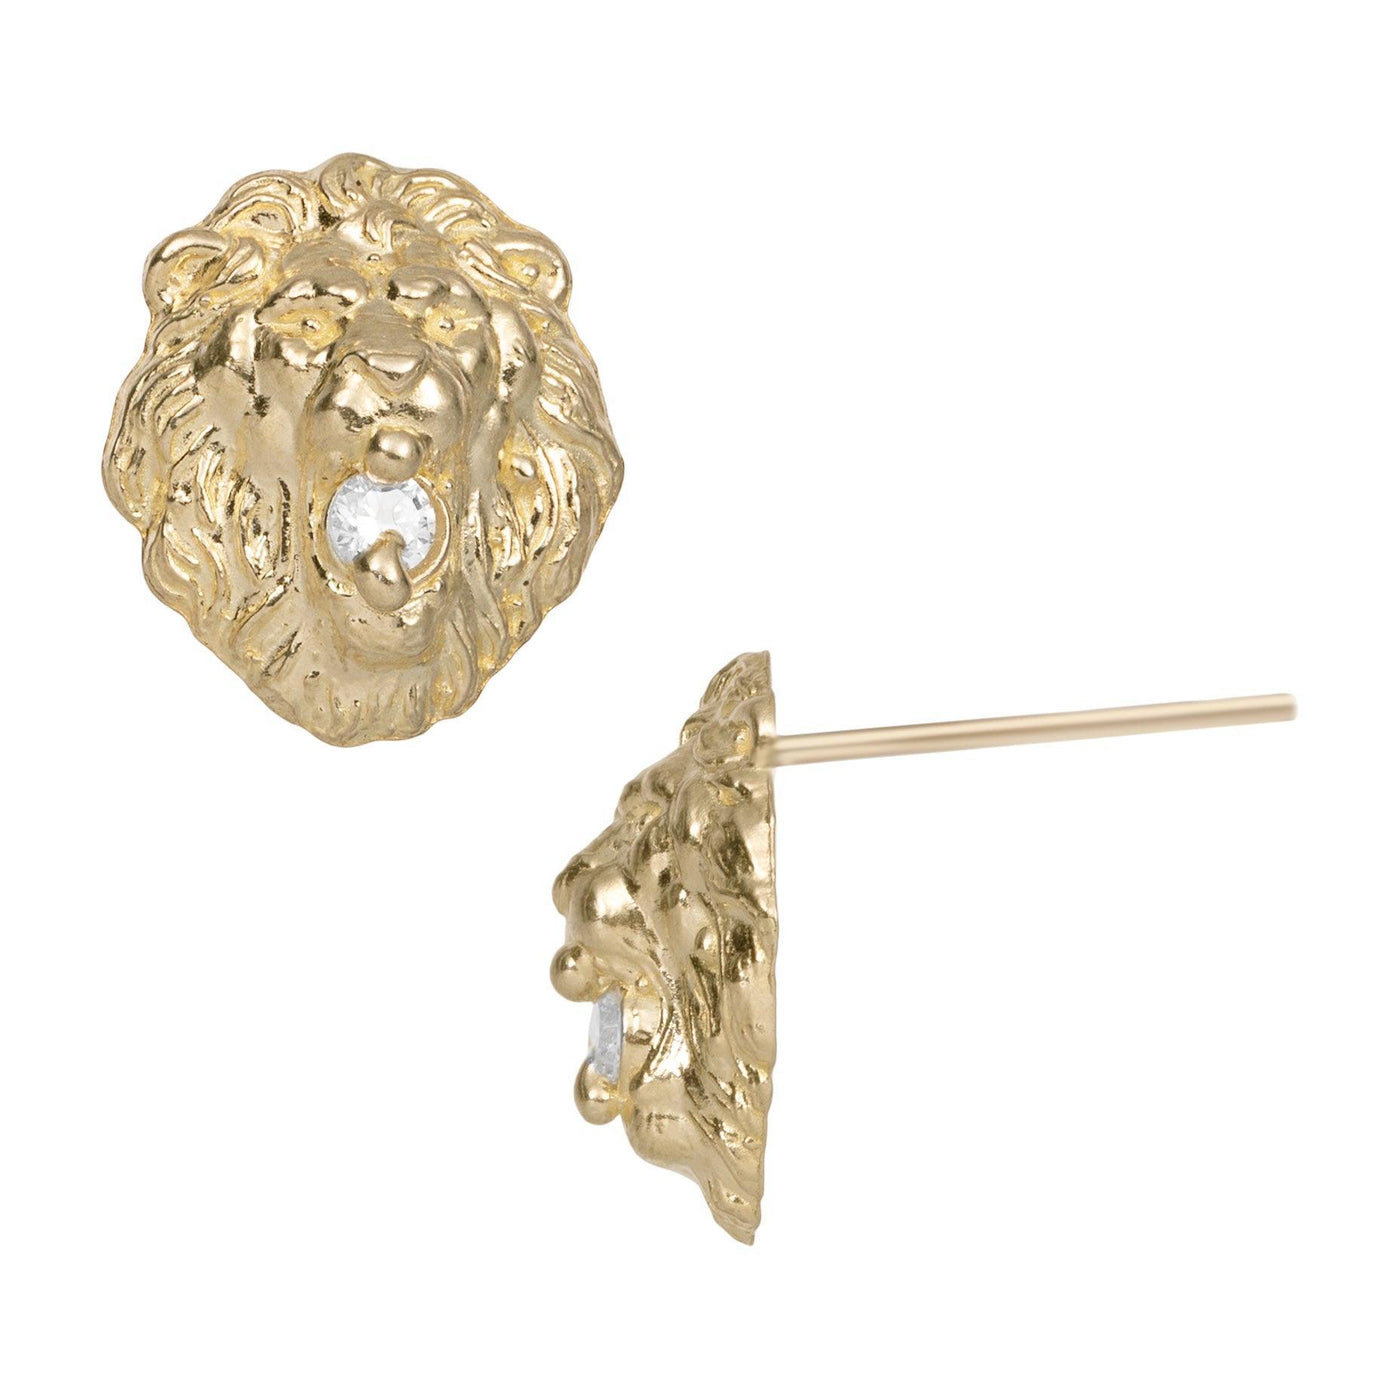 Small Roaring Lion Head CZ Stud Earrings Solid 10K Yellow Gold - bayamjewelry